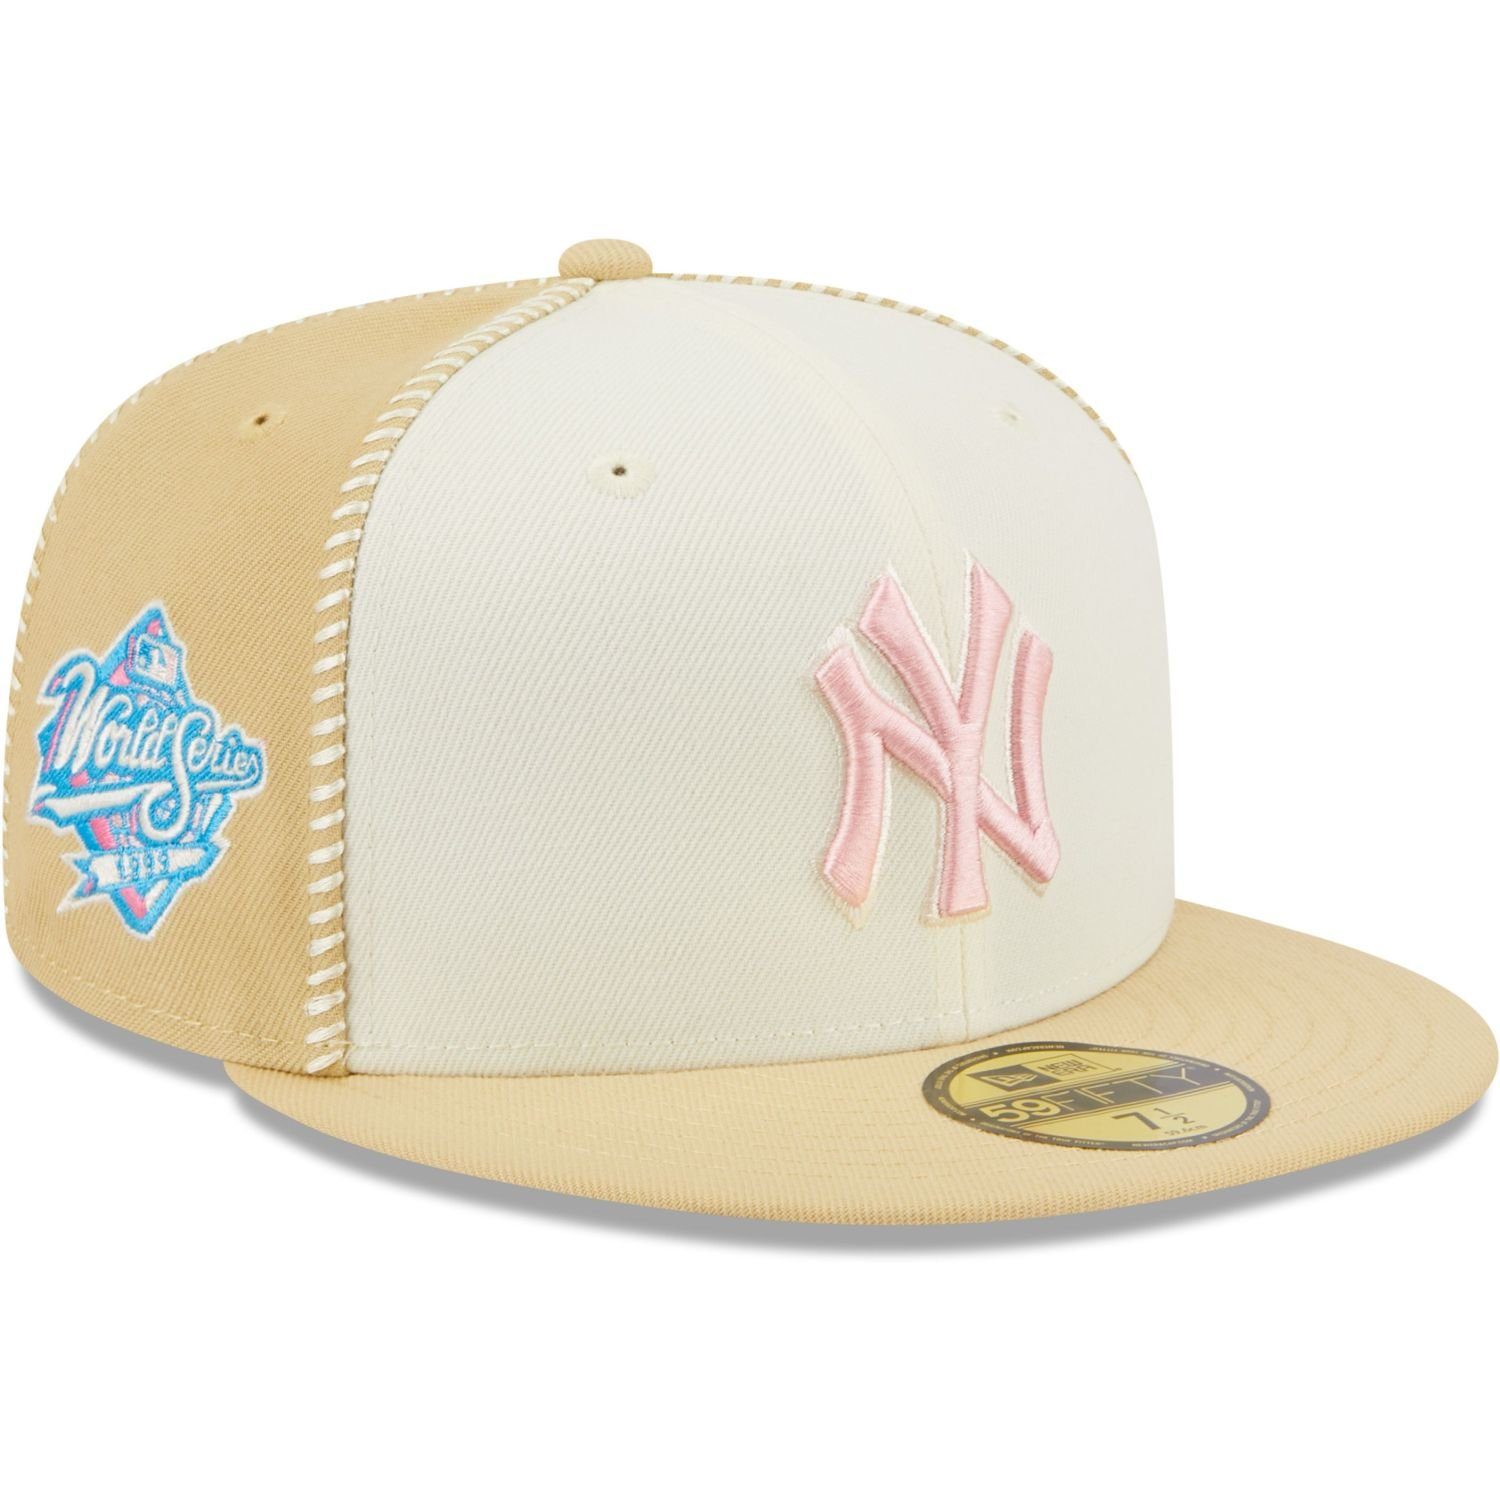 New Era Fitted Cap 59Fifty SEAM STITCH New York Yankees